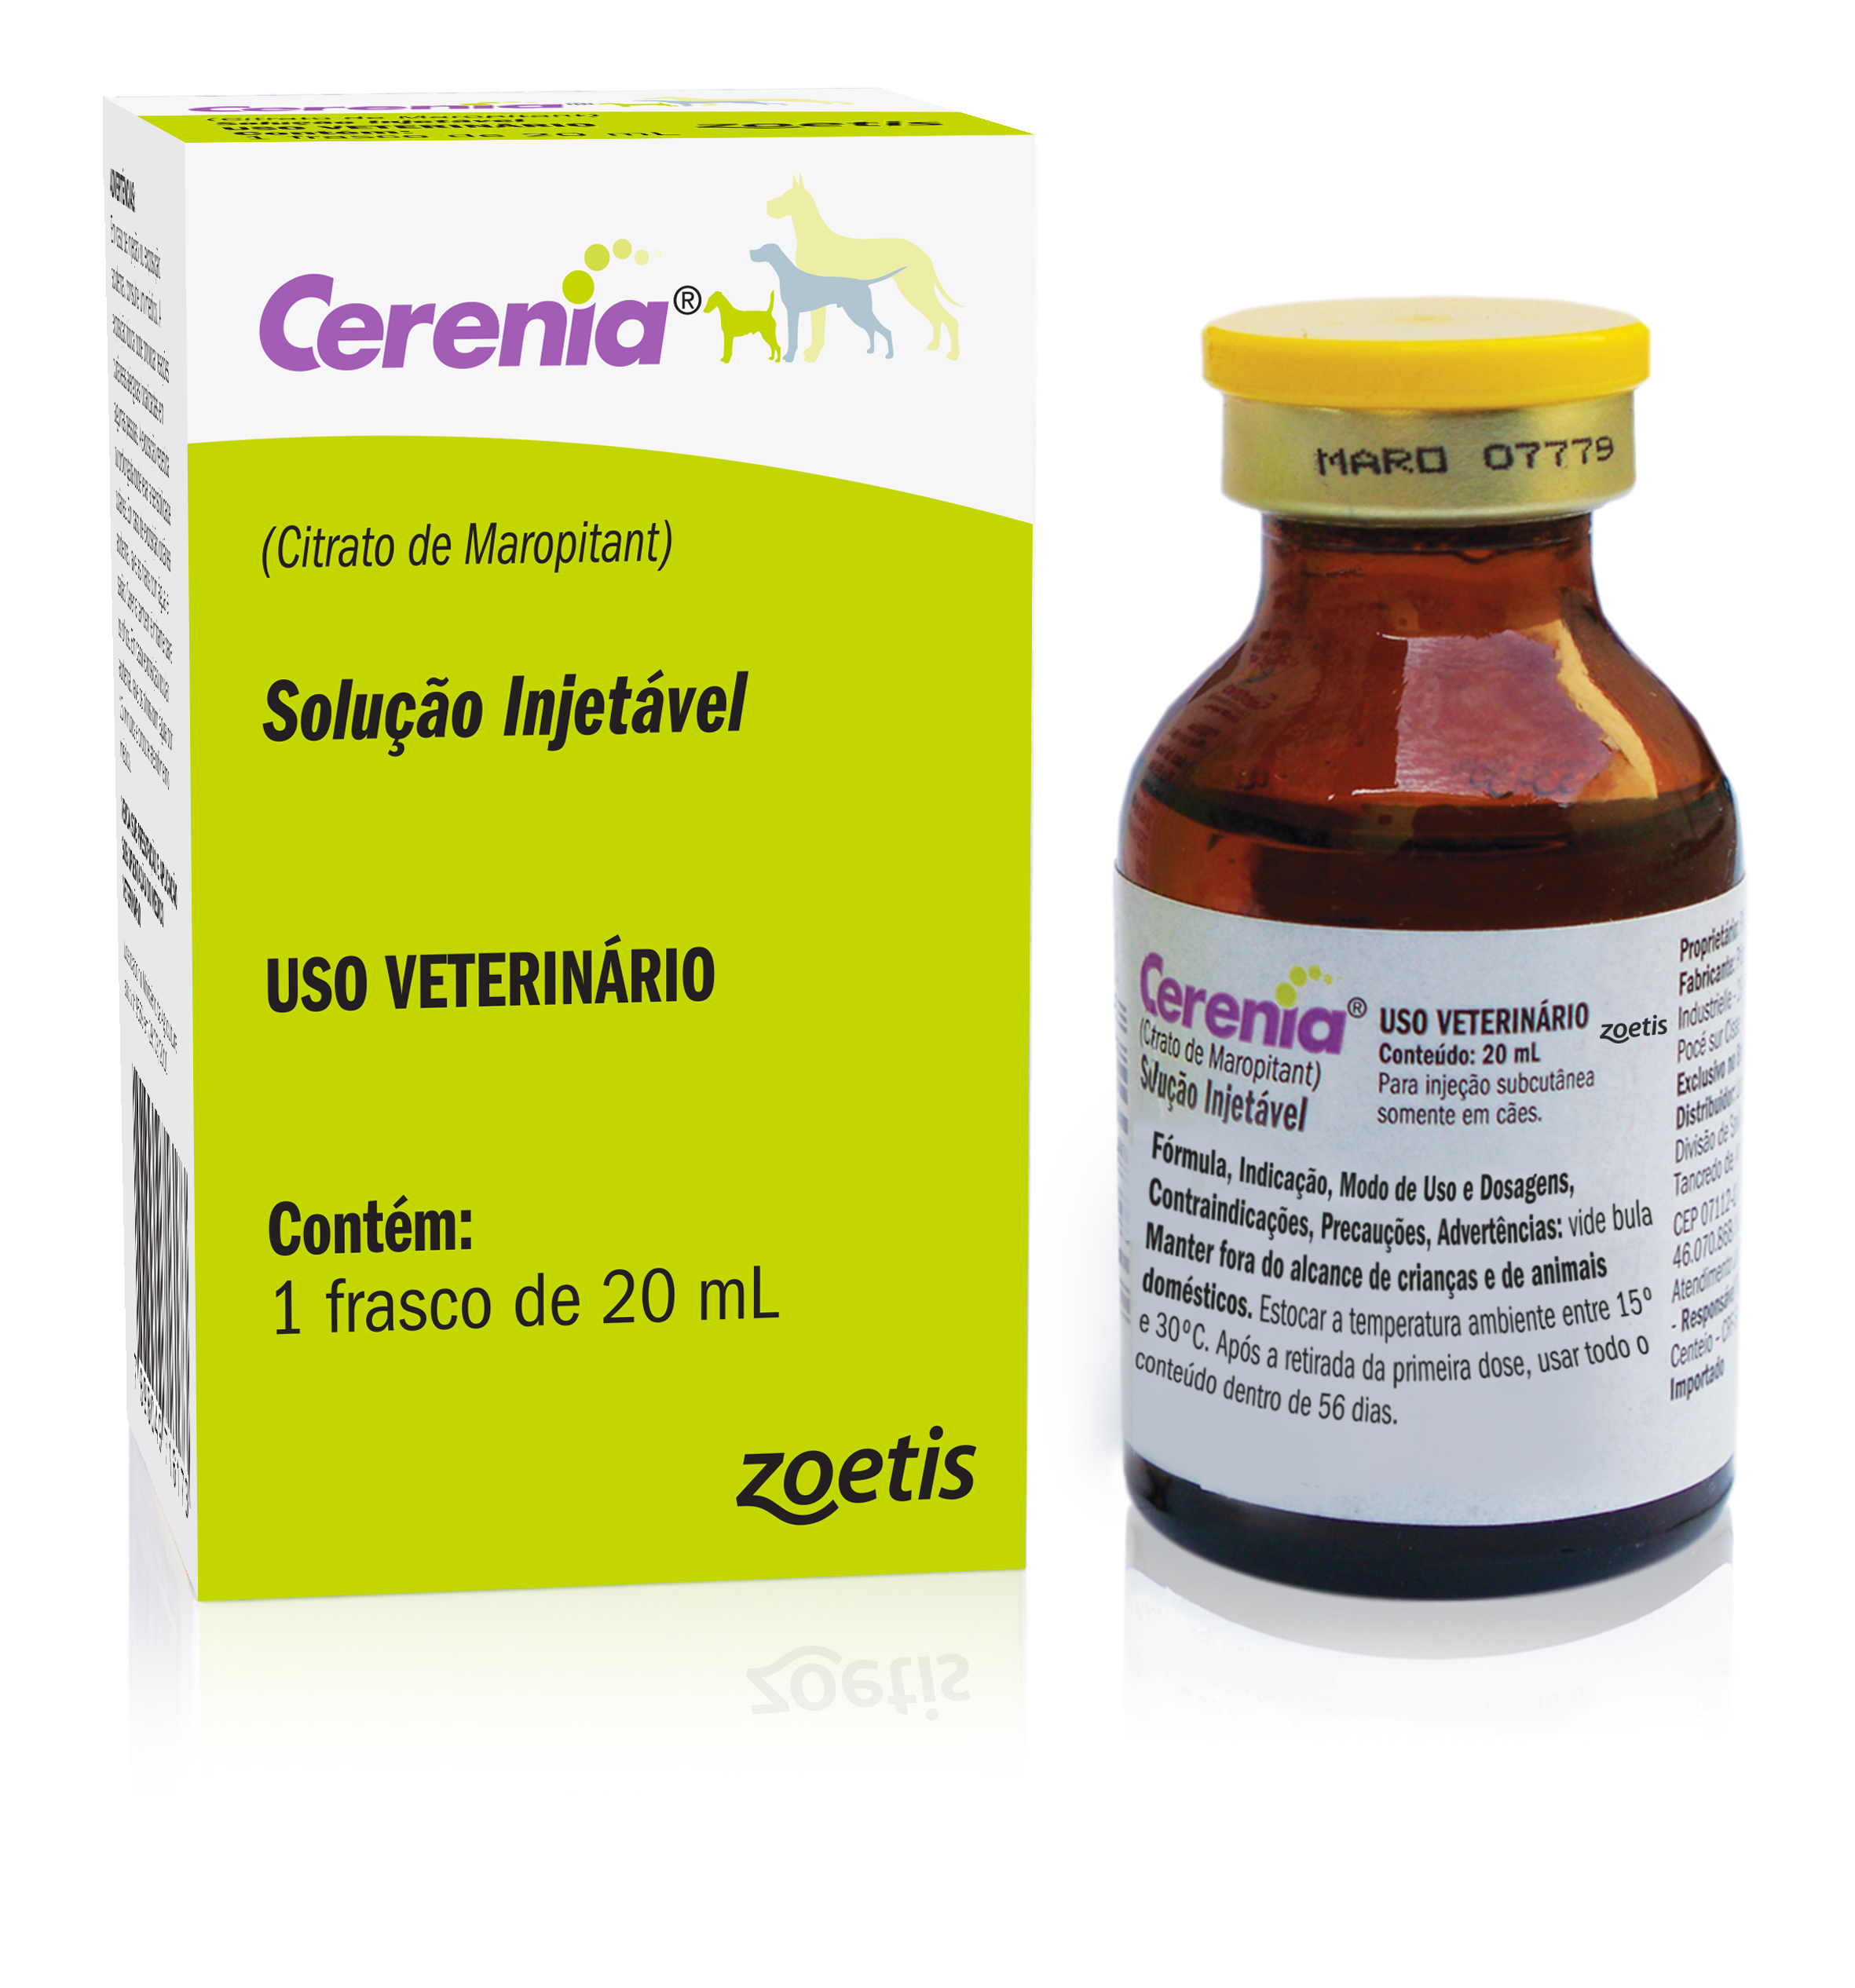 Cerenia Solucao injetavel product